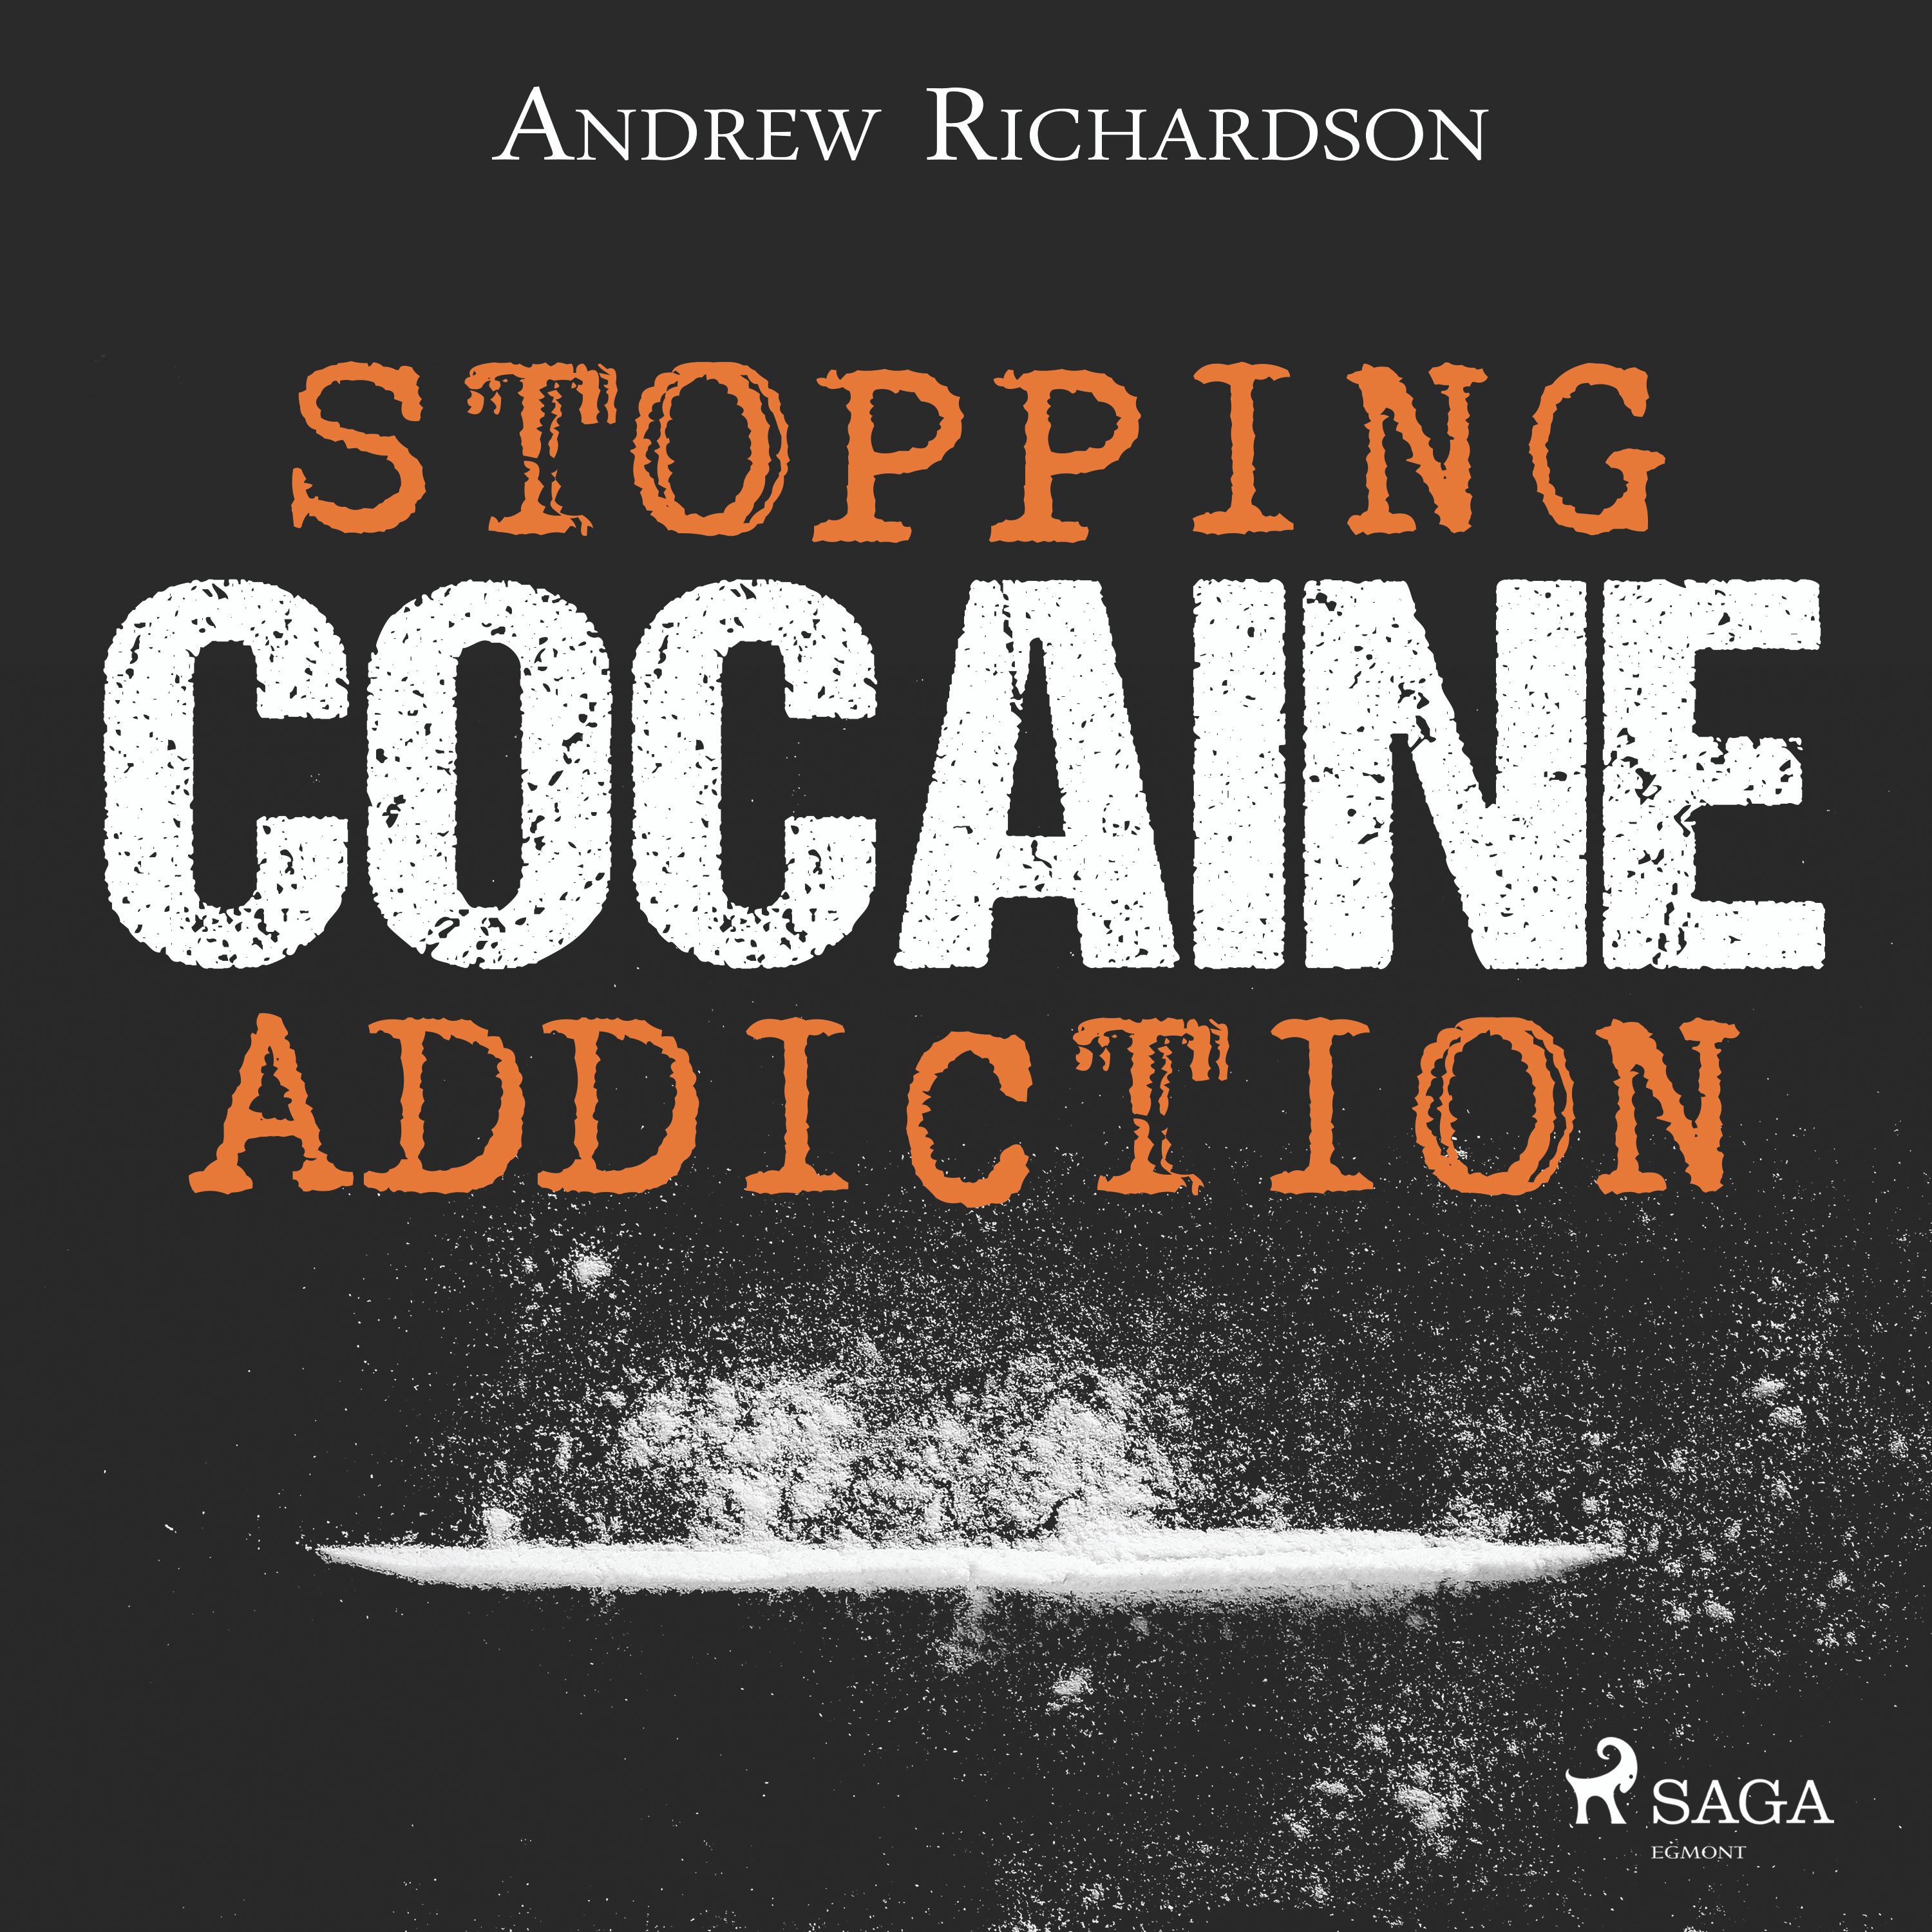 Stopping Cocaine Addiction, lydbog af Andrew Richardson